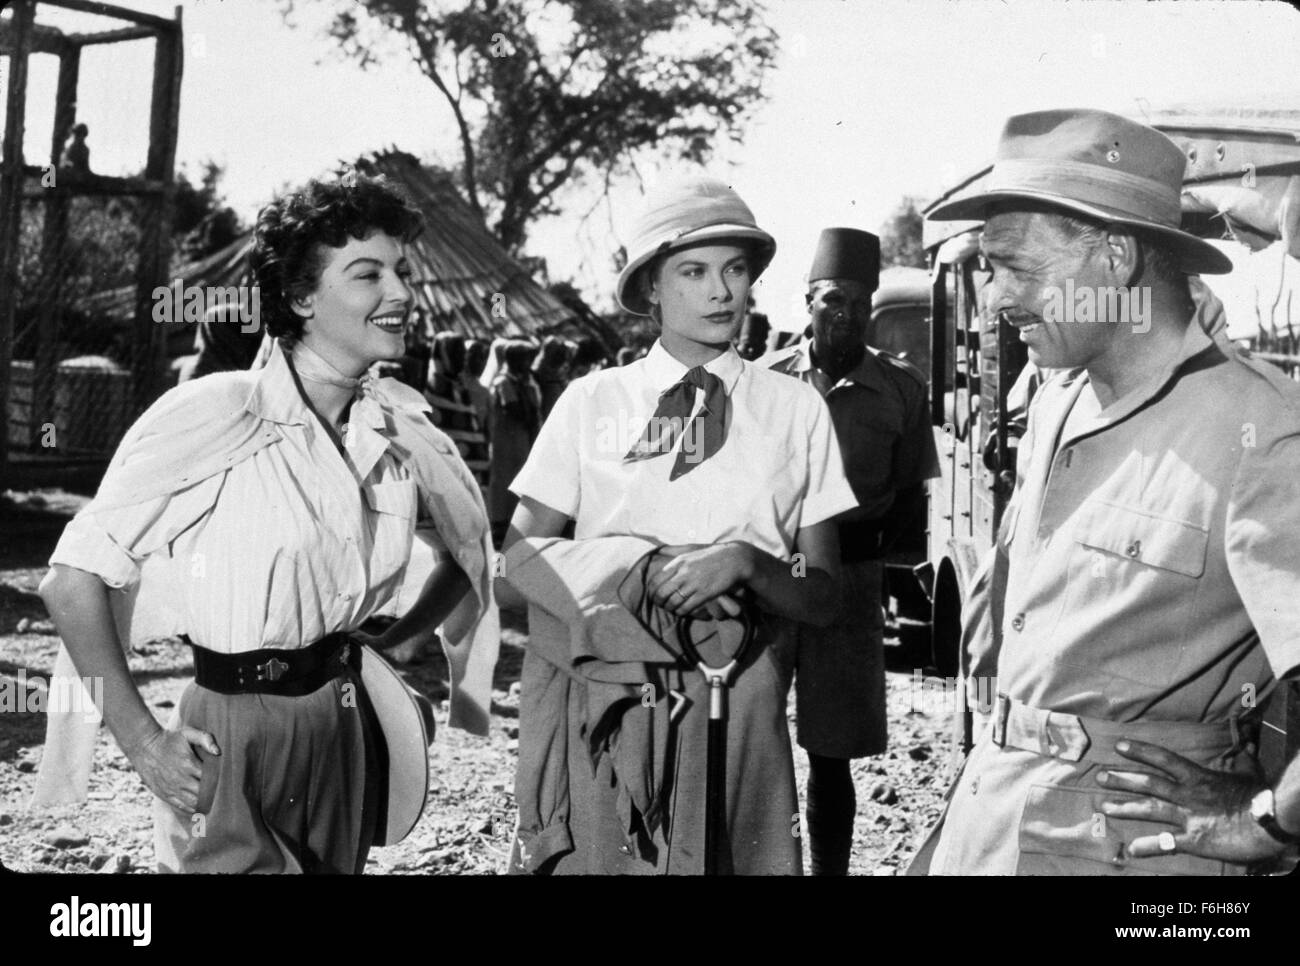 1953, Filmtitel: MOGAMBO, Regie: JOHN FORD, Studio: MGM, Bild: JOHN FORD, CLARK GABLE, AVA GARDNER. (Bild Kredit: SNAP) Stockfoto